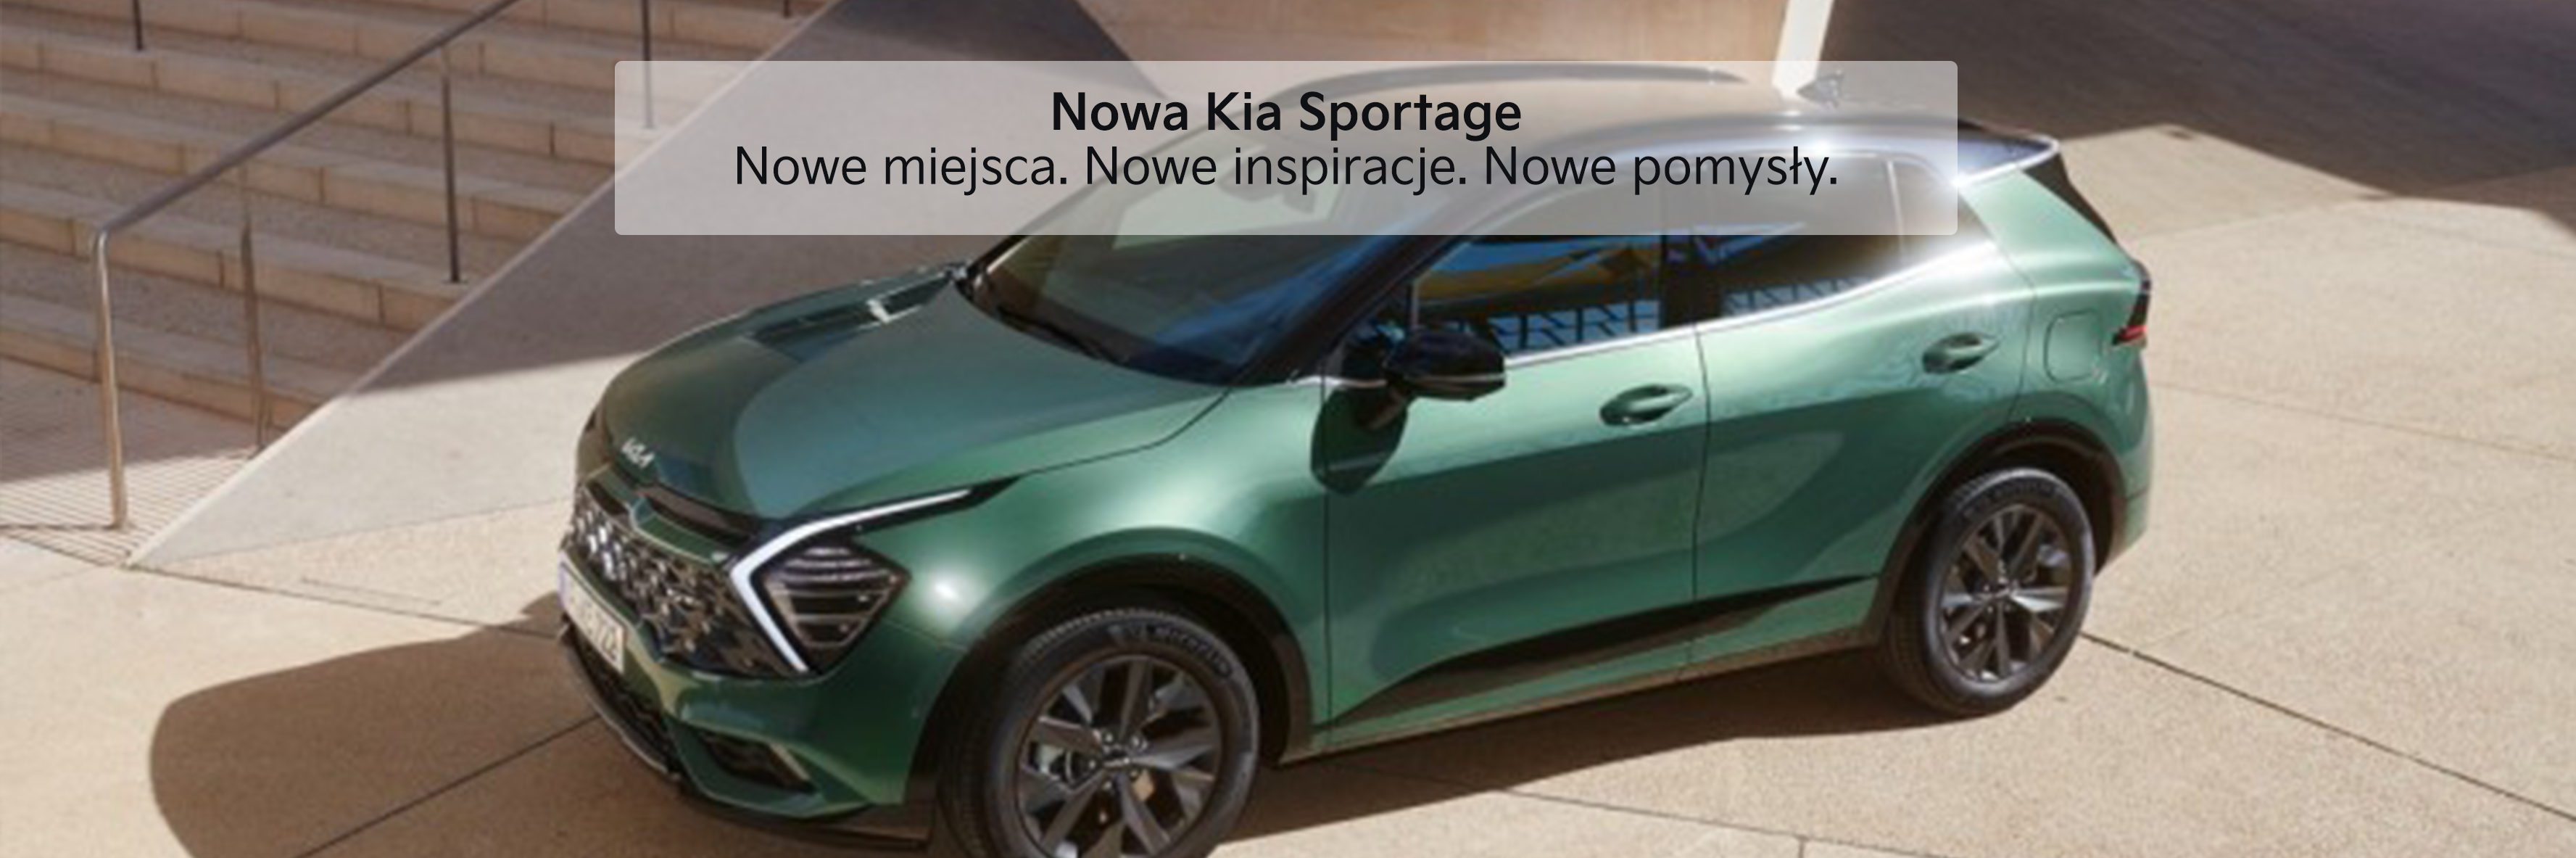 https://kia.polmotor.pl/index.php/samochod/nowa-kia-sportage/